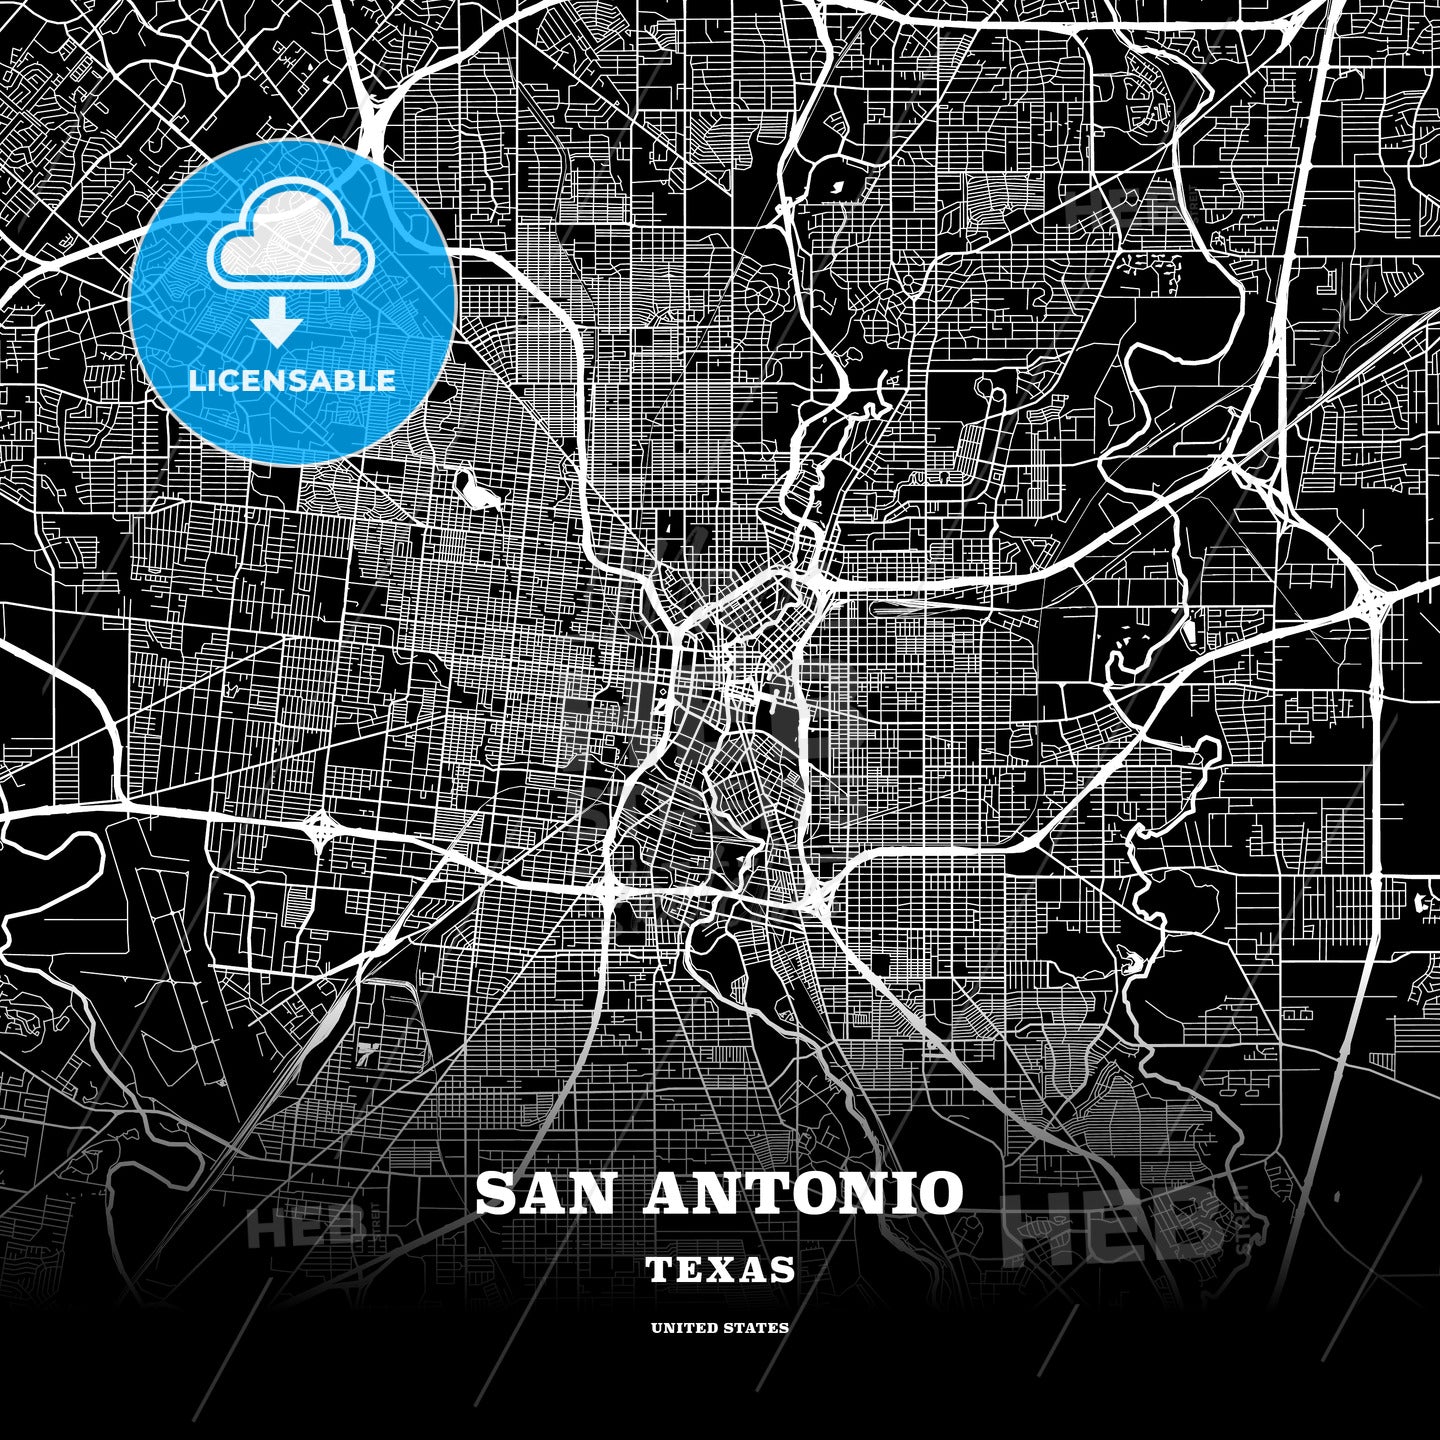 San Antonio, Texas, USA map